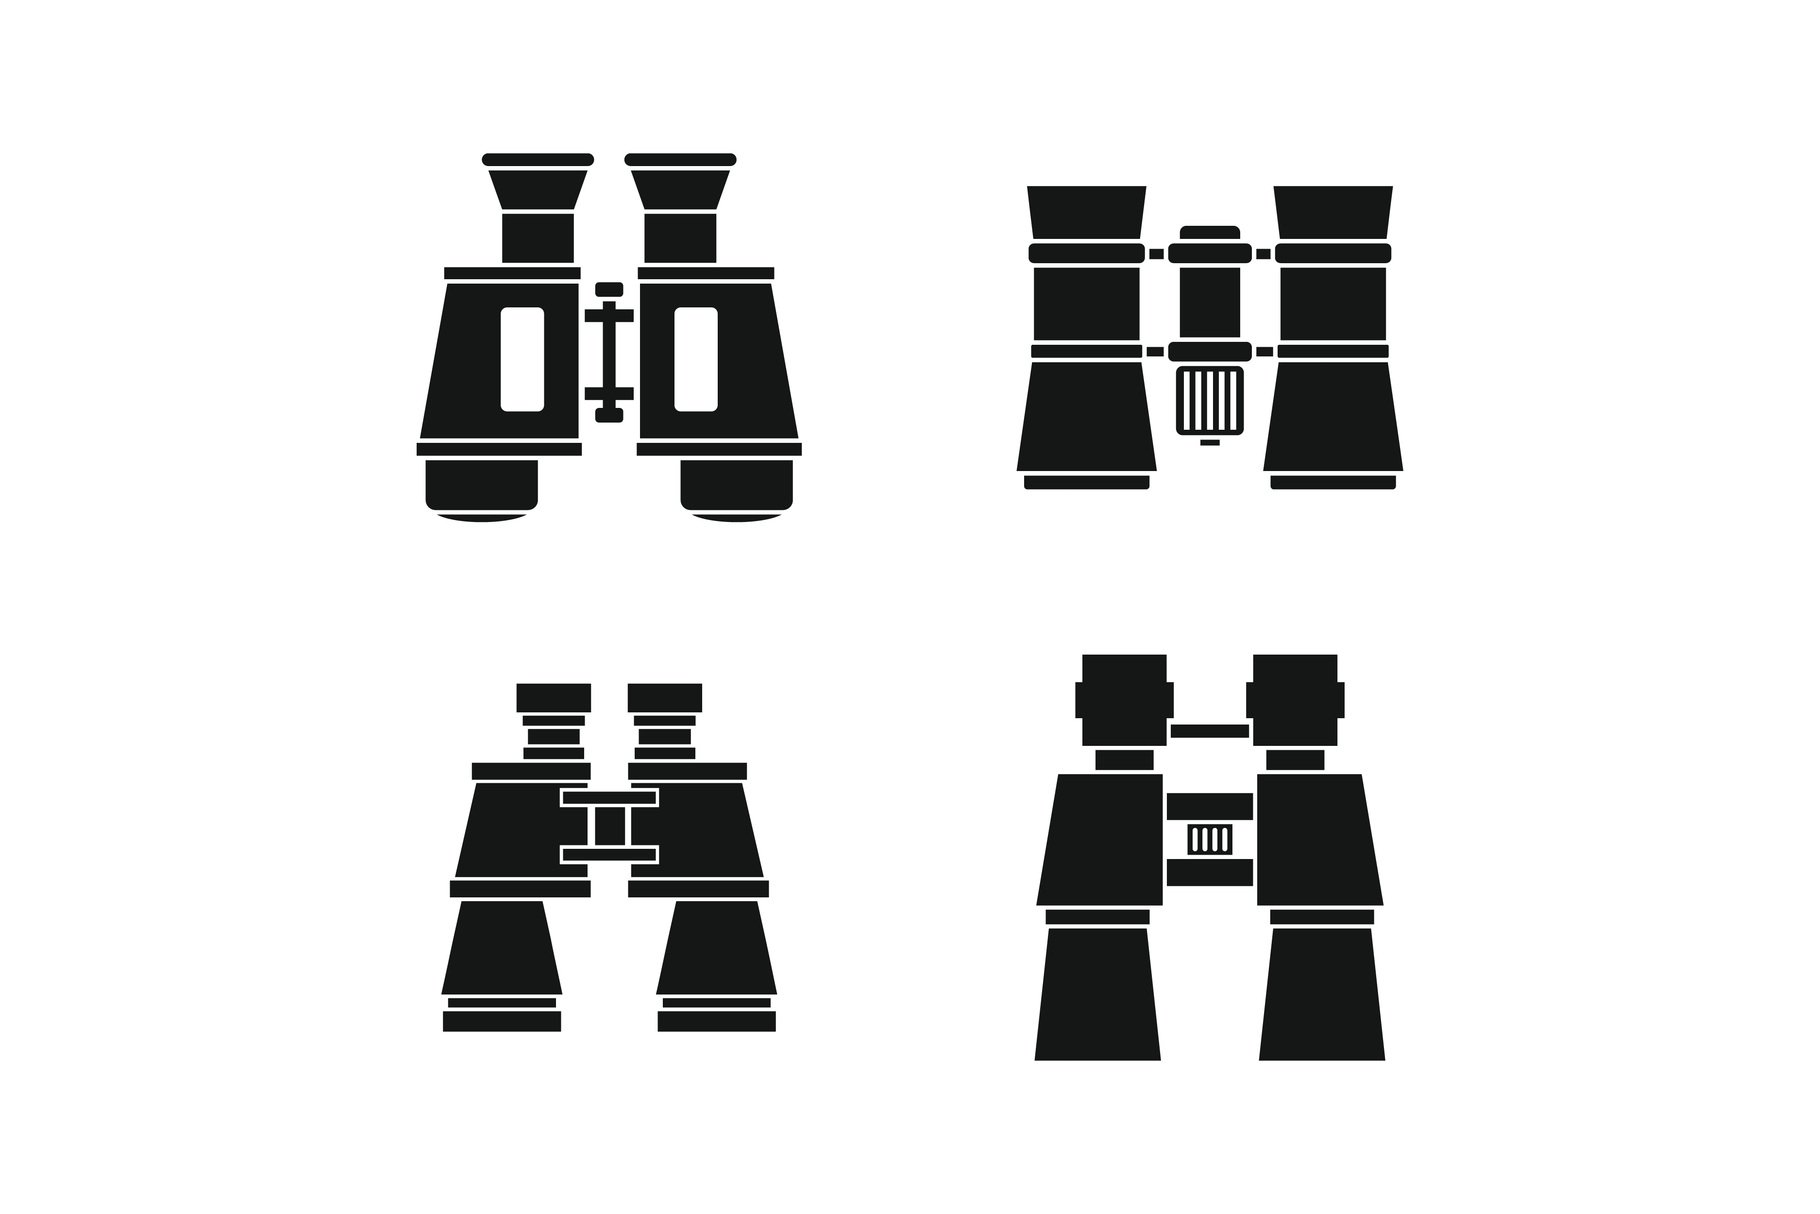 binoculars simple icon